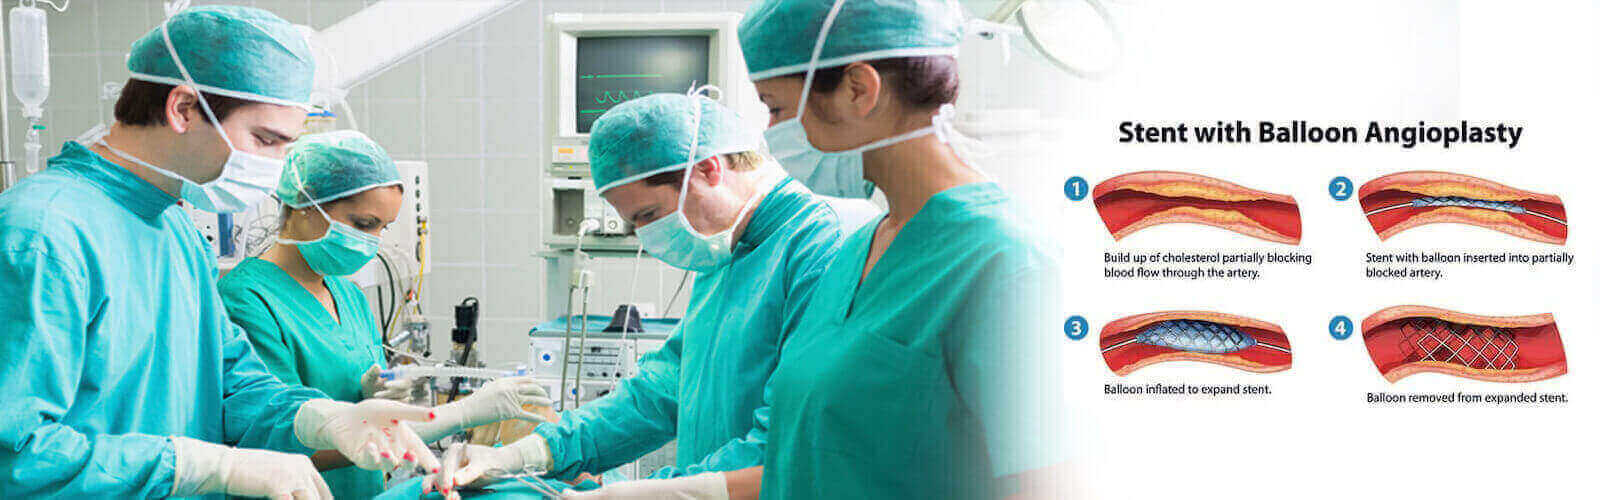 Angioplasty Surgery in Uruguay